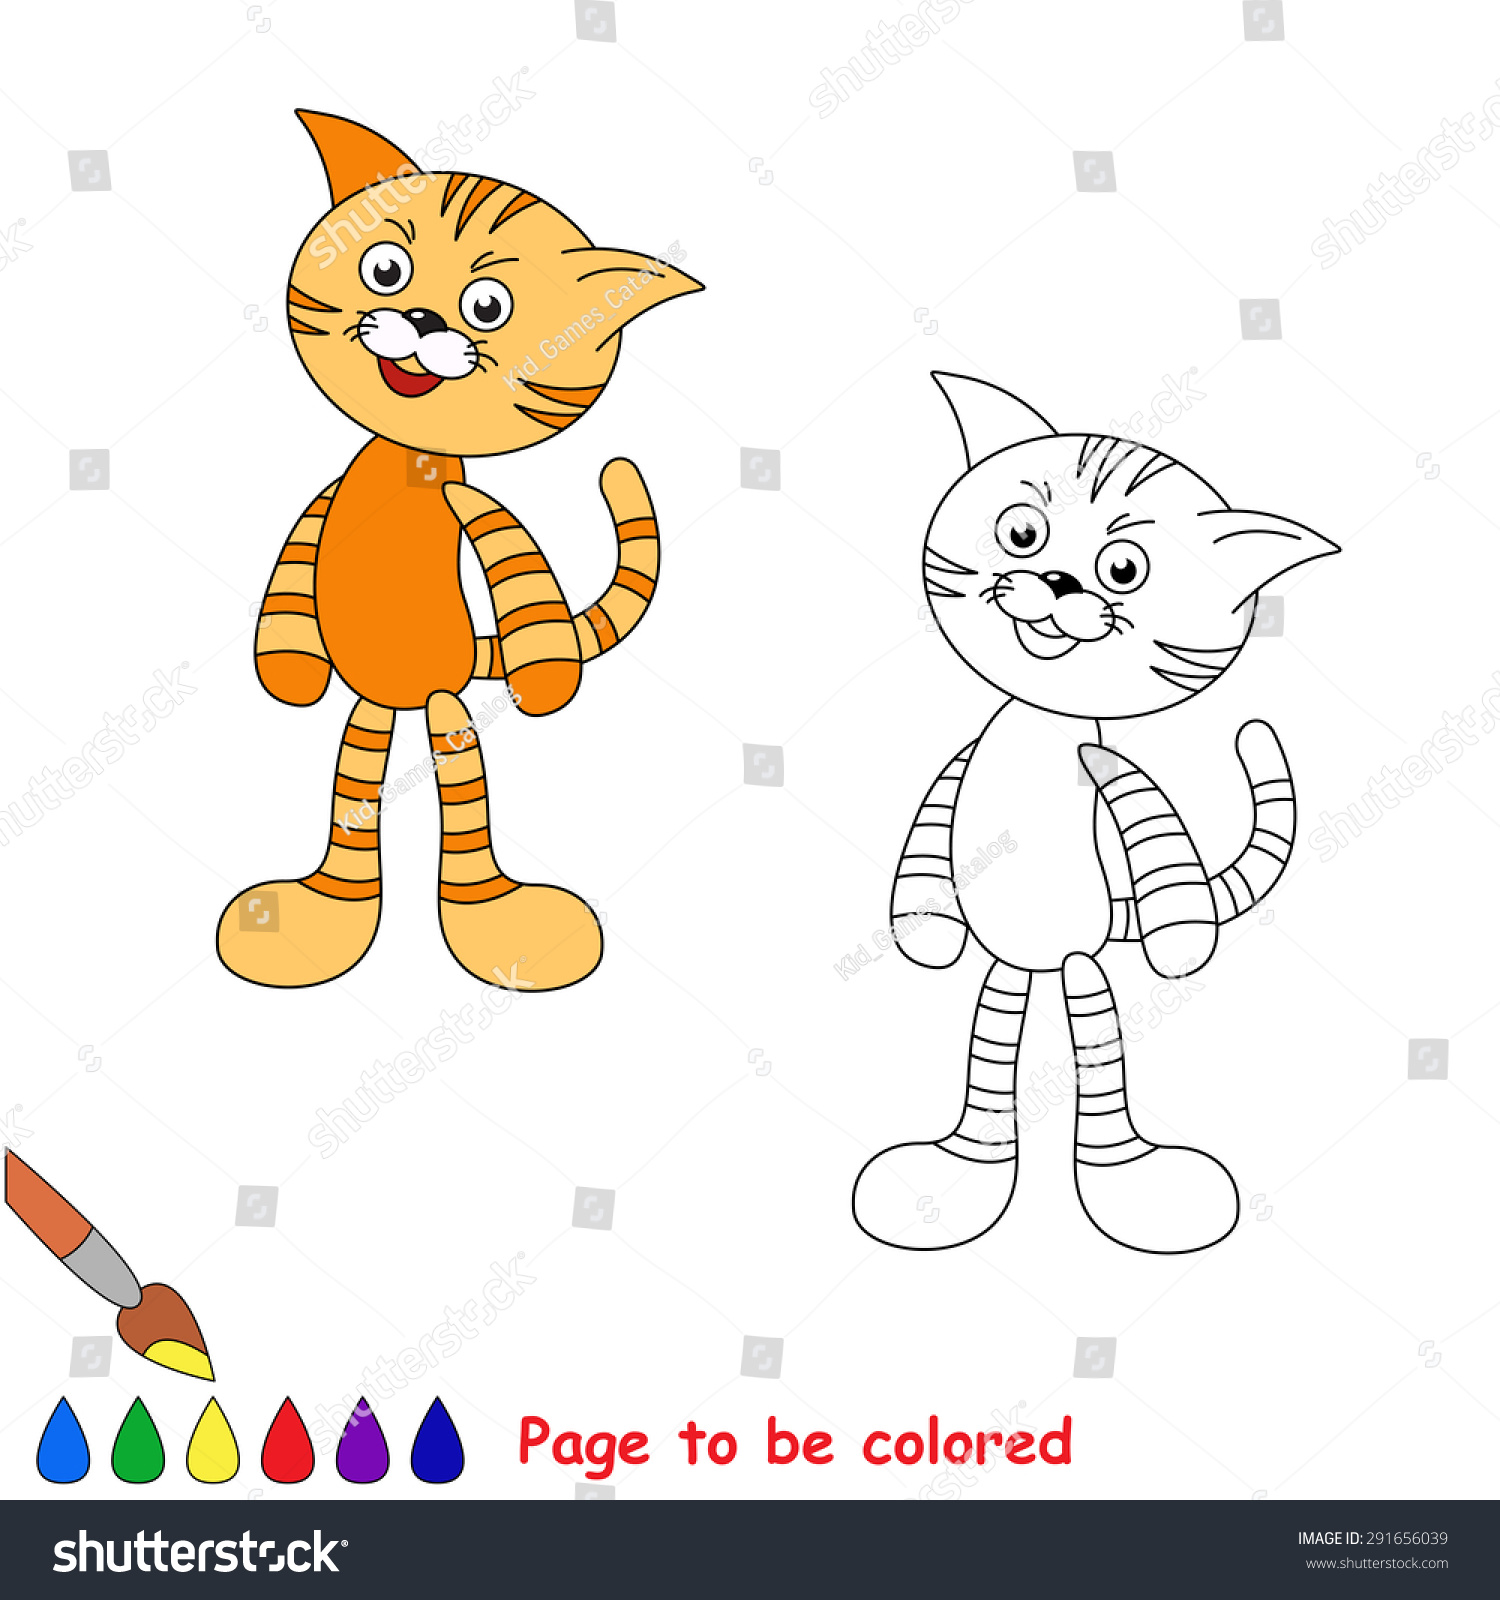 Download Tabby Orange Toy Cat Kid Game Stock Vector 291656039 ...